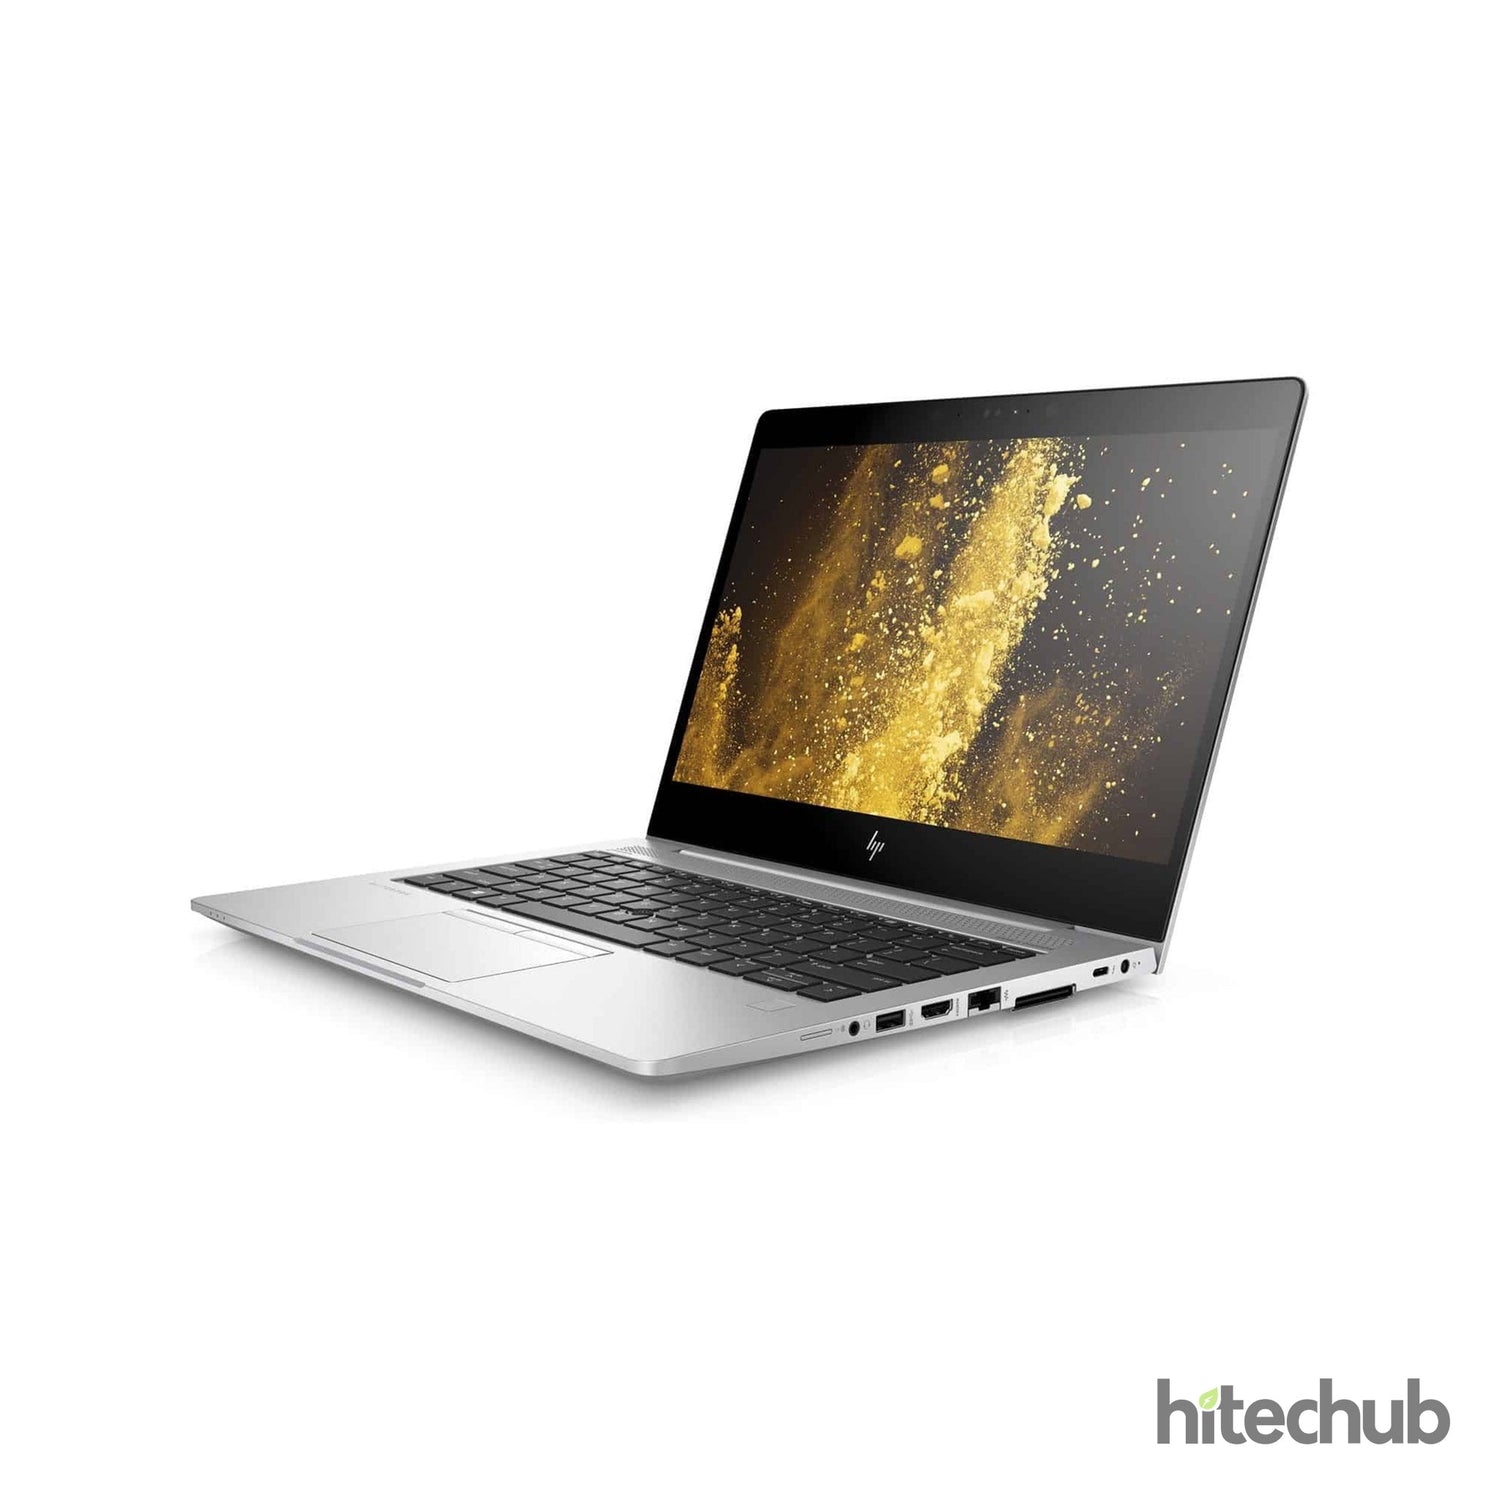 Laptops - Hitech Hub